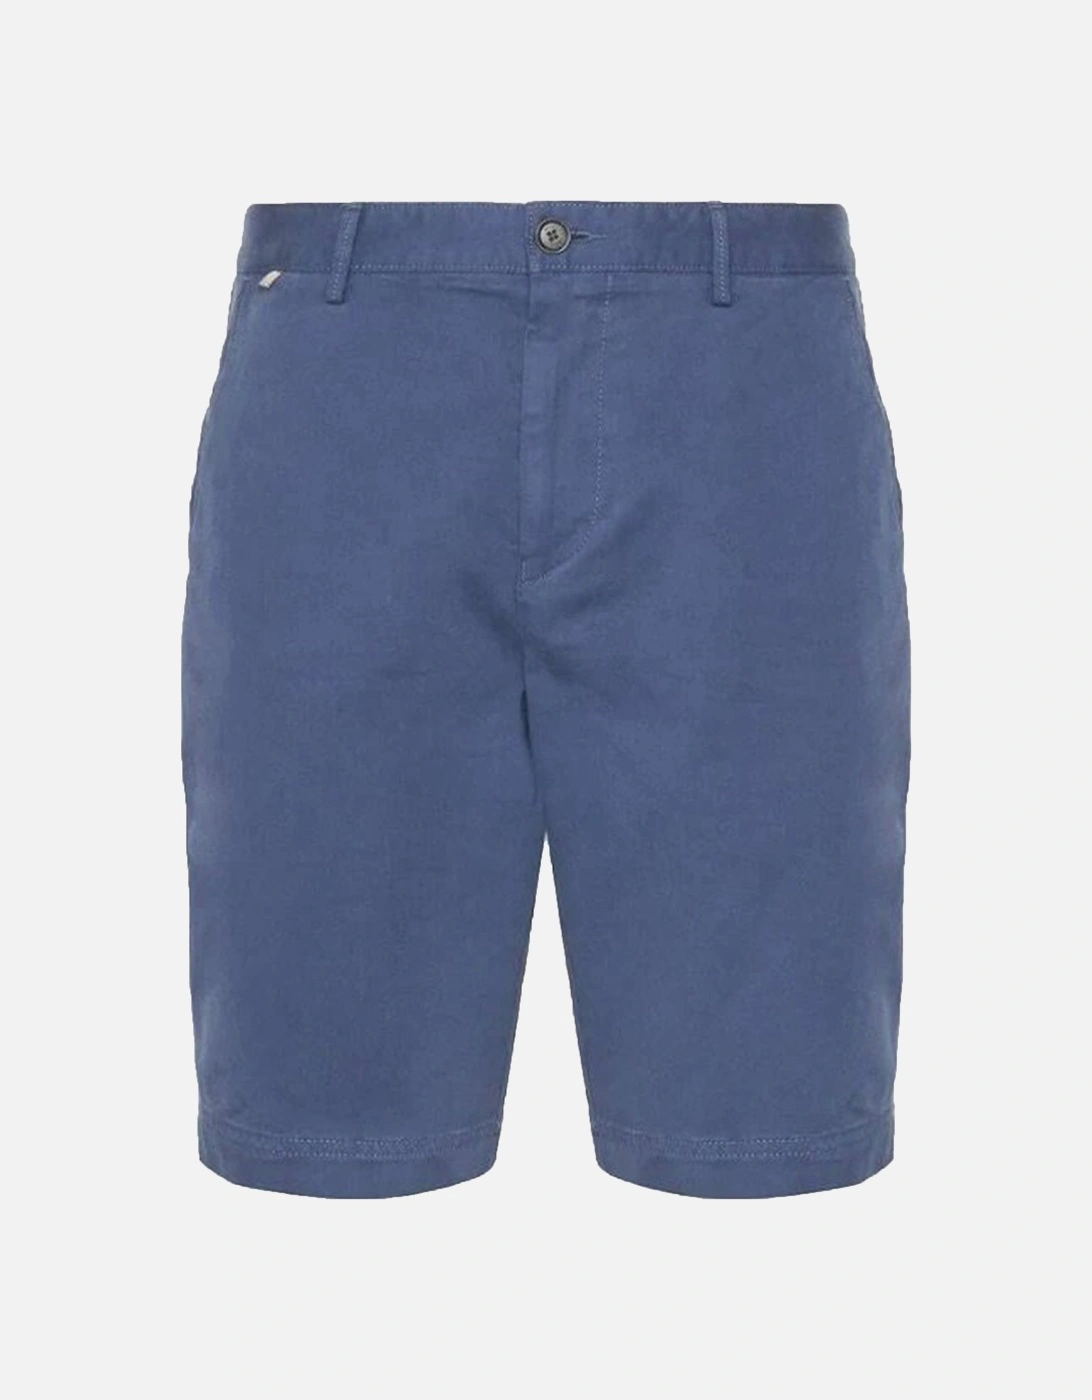 Men's Boss Trouser Shorts Blue - Size: 38/39/32